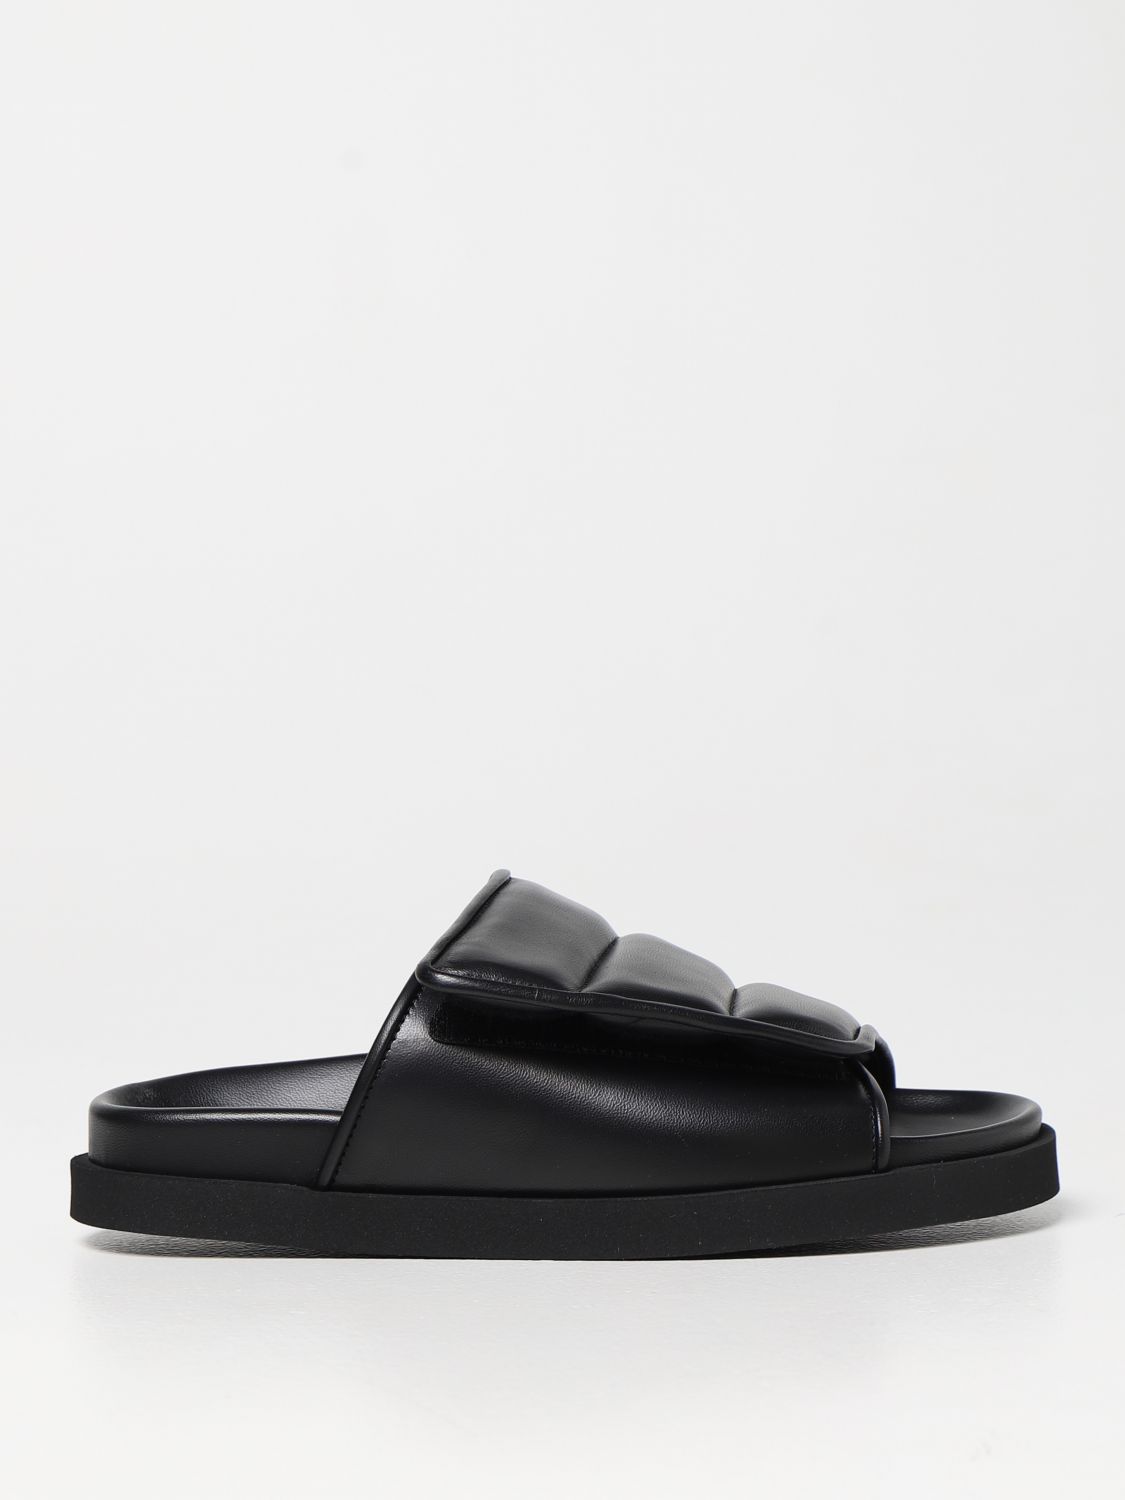 Gia Borghini Outlet: flat sandals for woman - Black | Gia Borghini flat ...